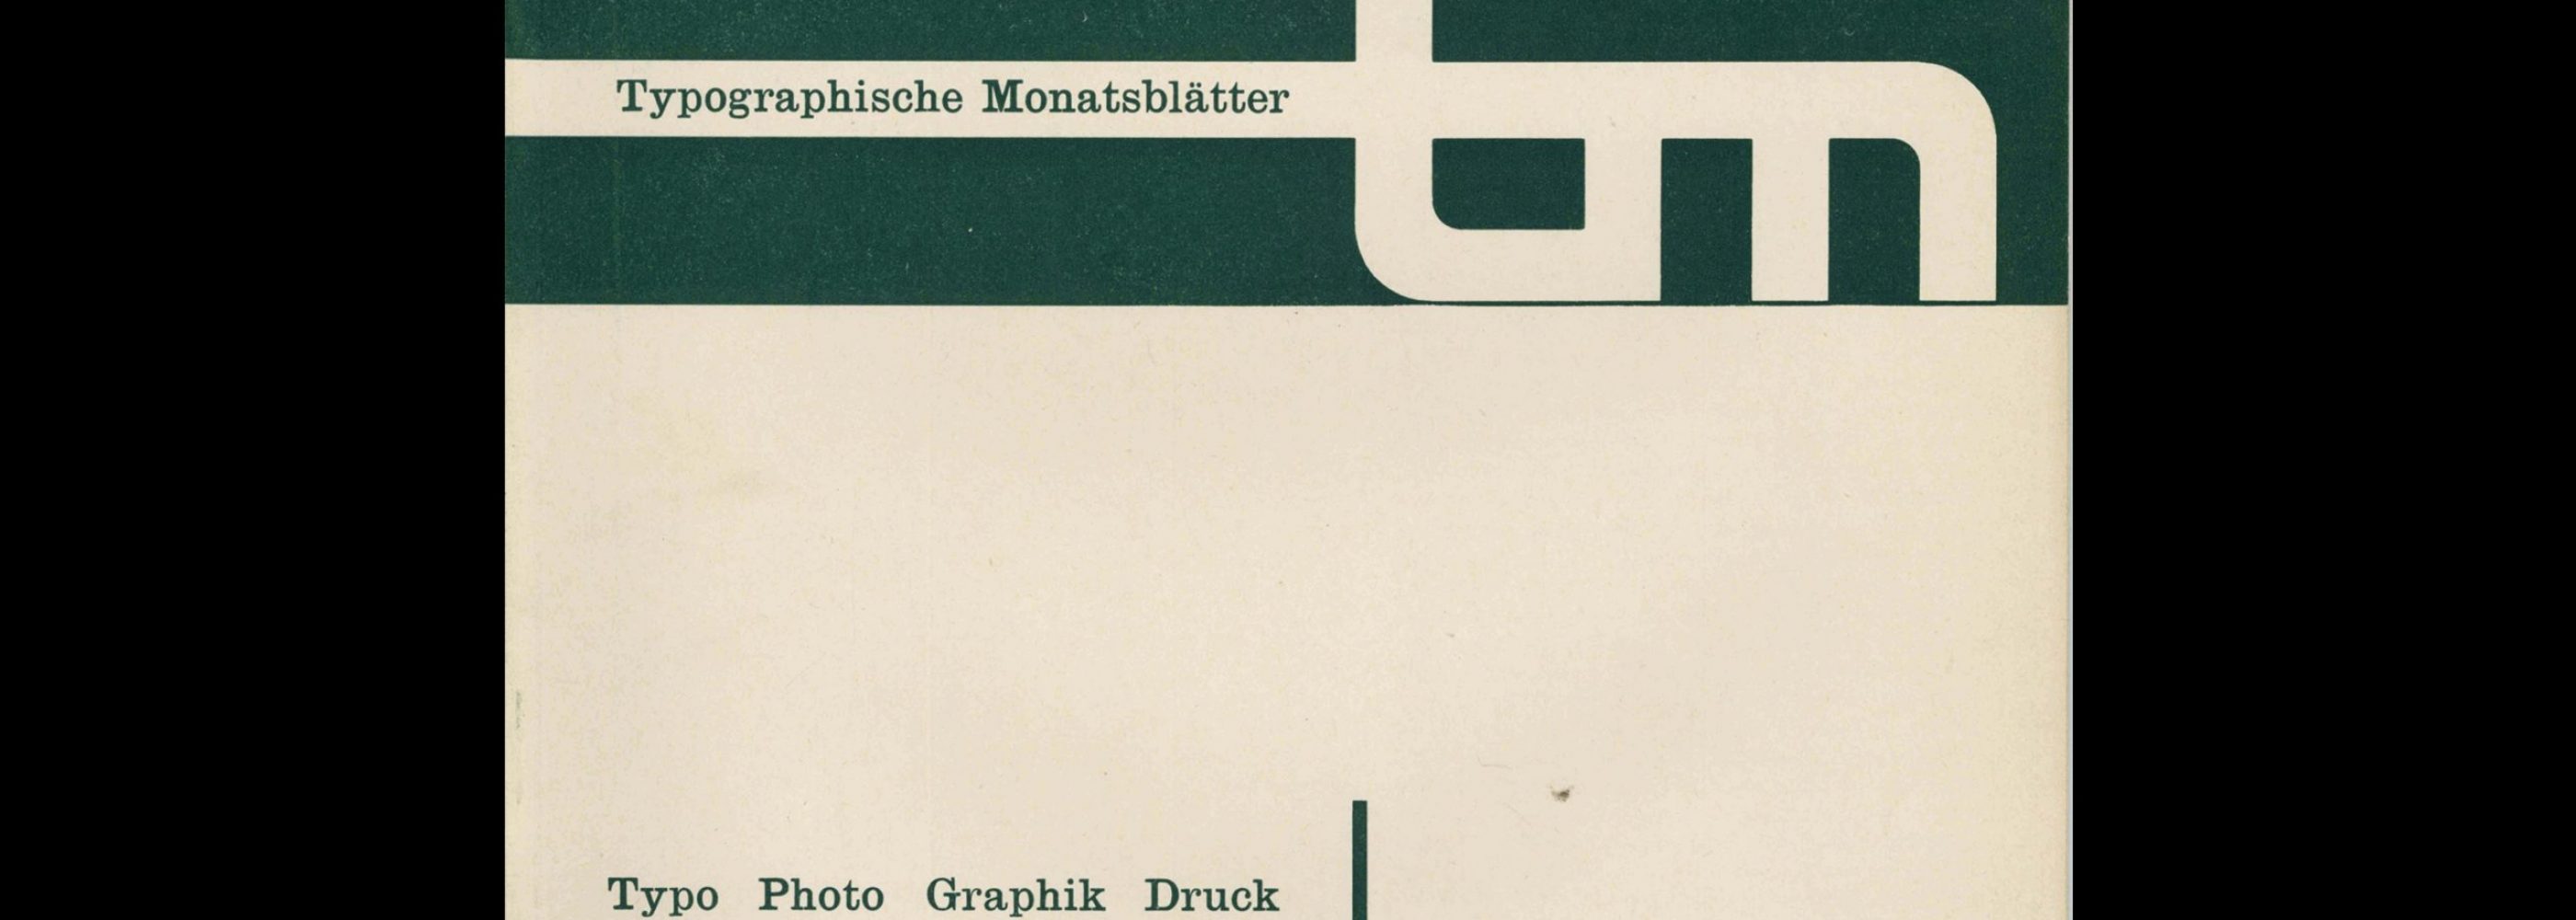 Typografische Monatsblätter, 8, 1944